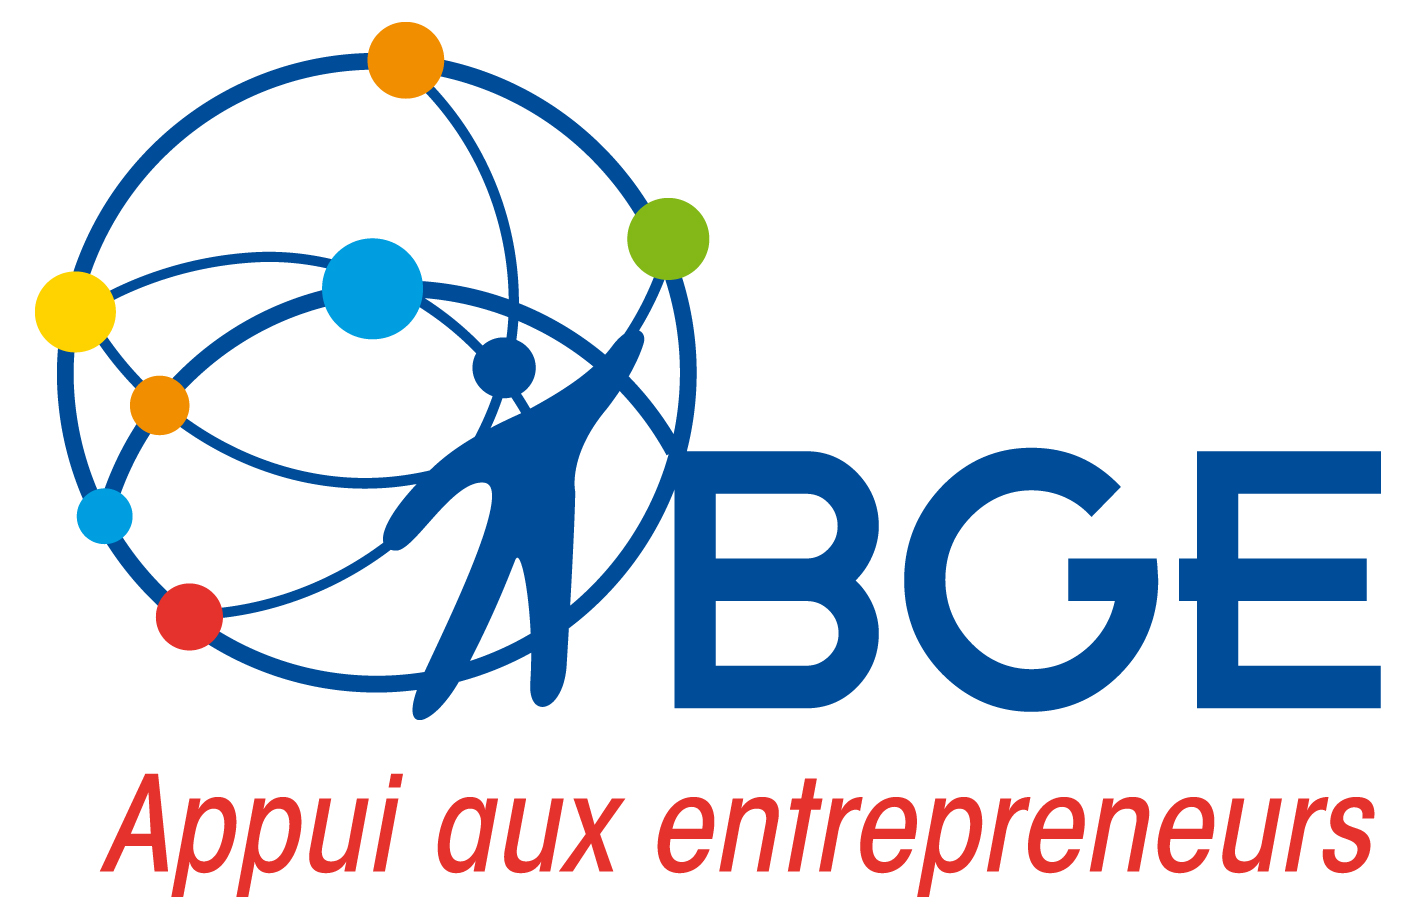 Logo_BGE